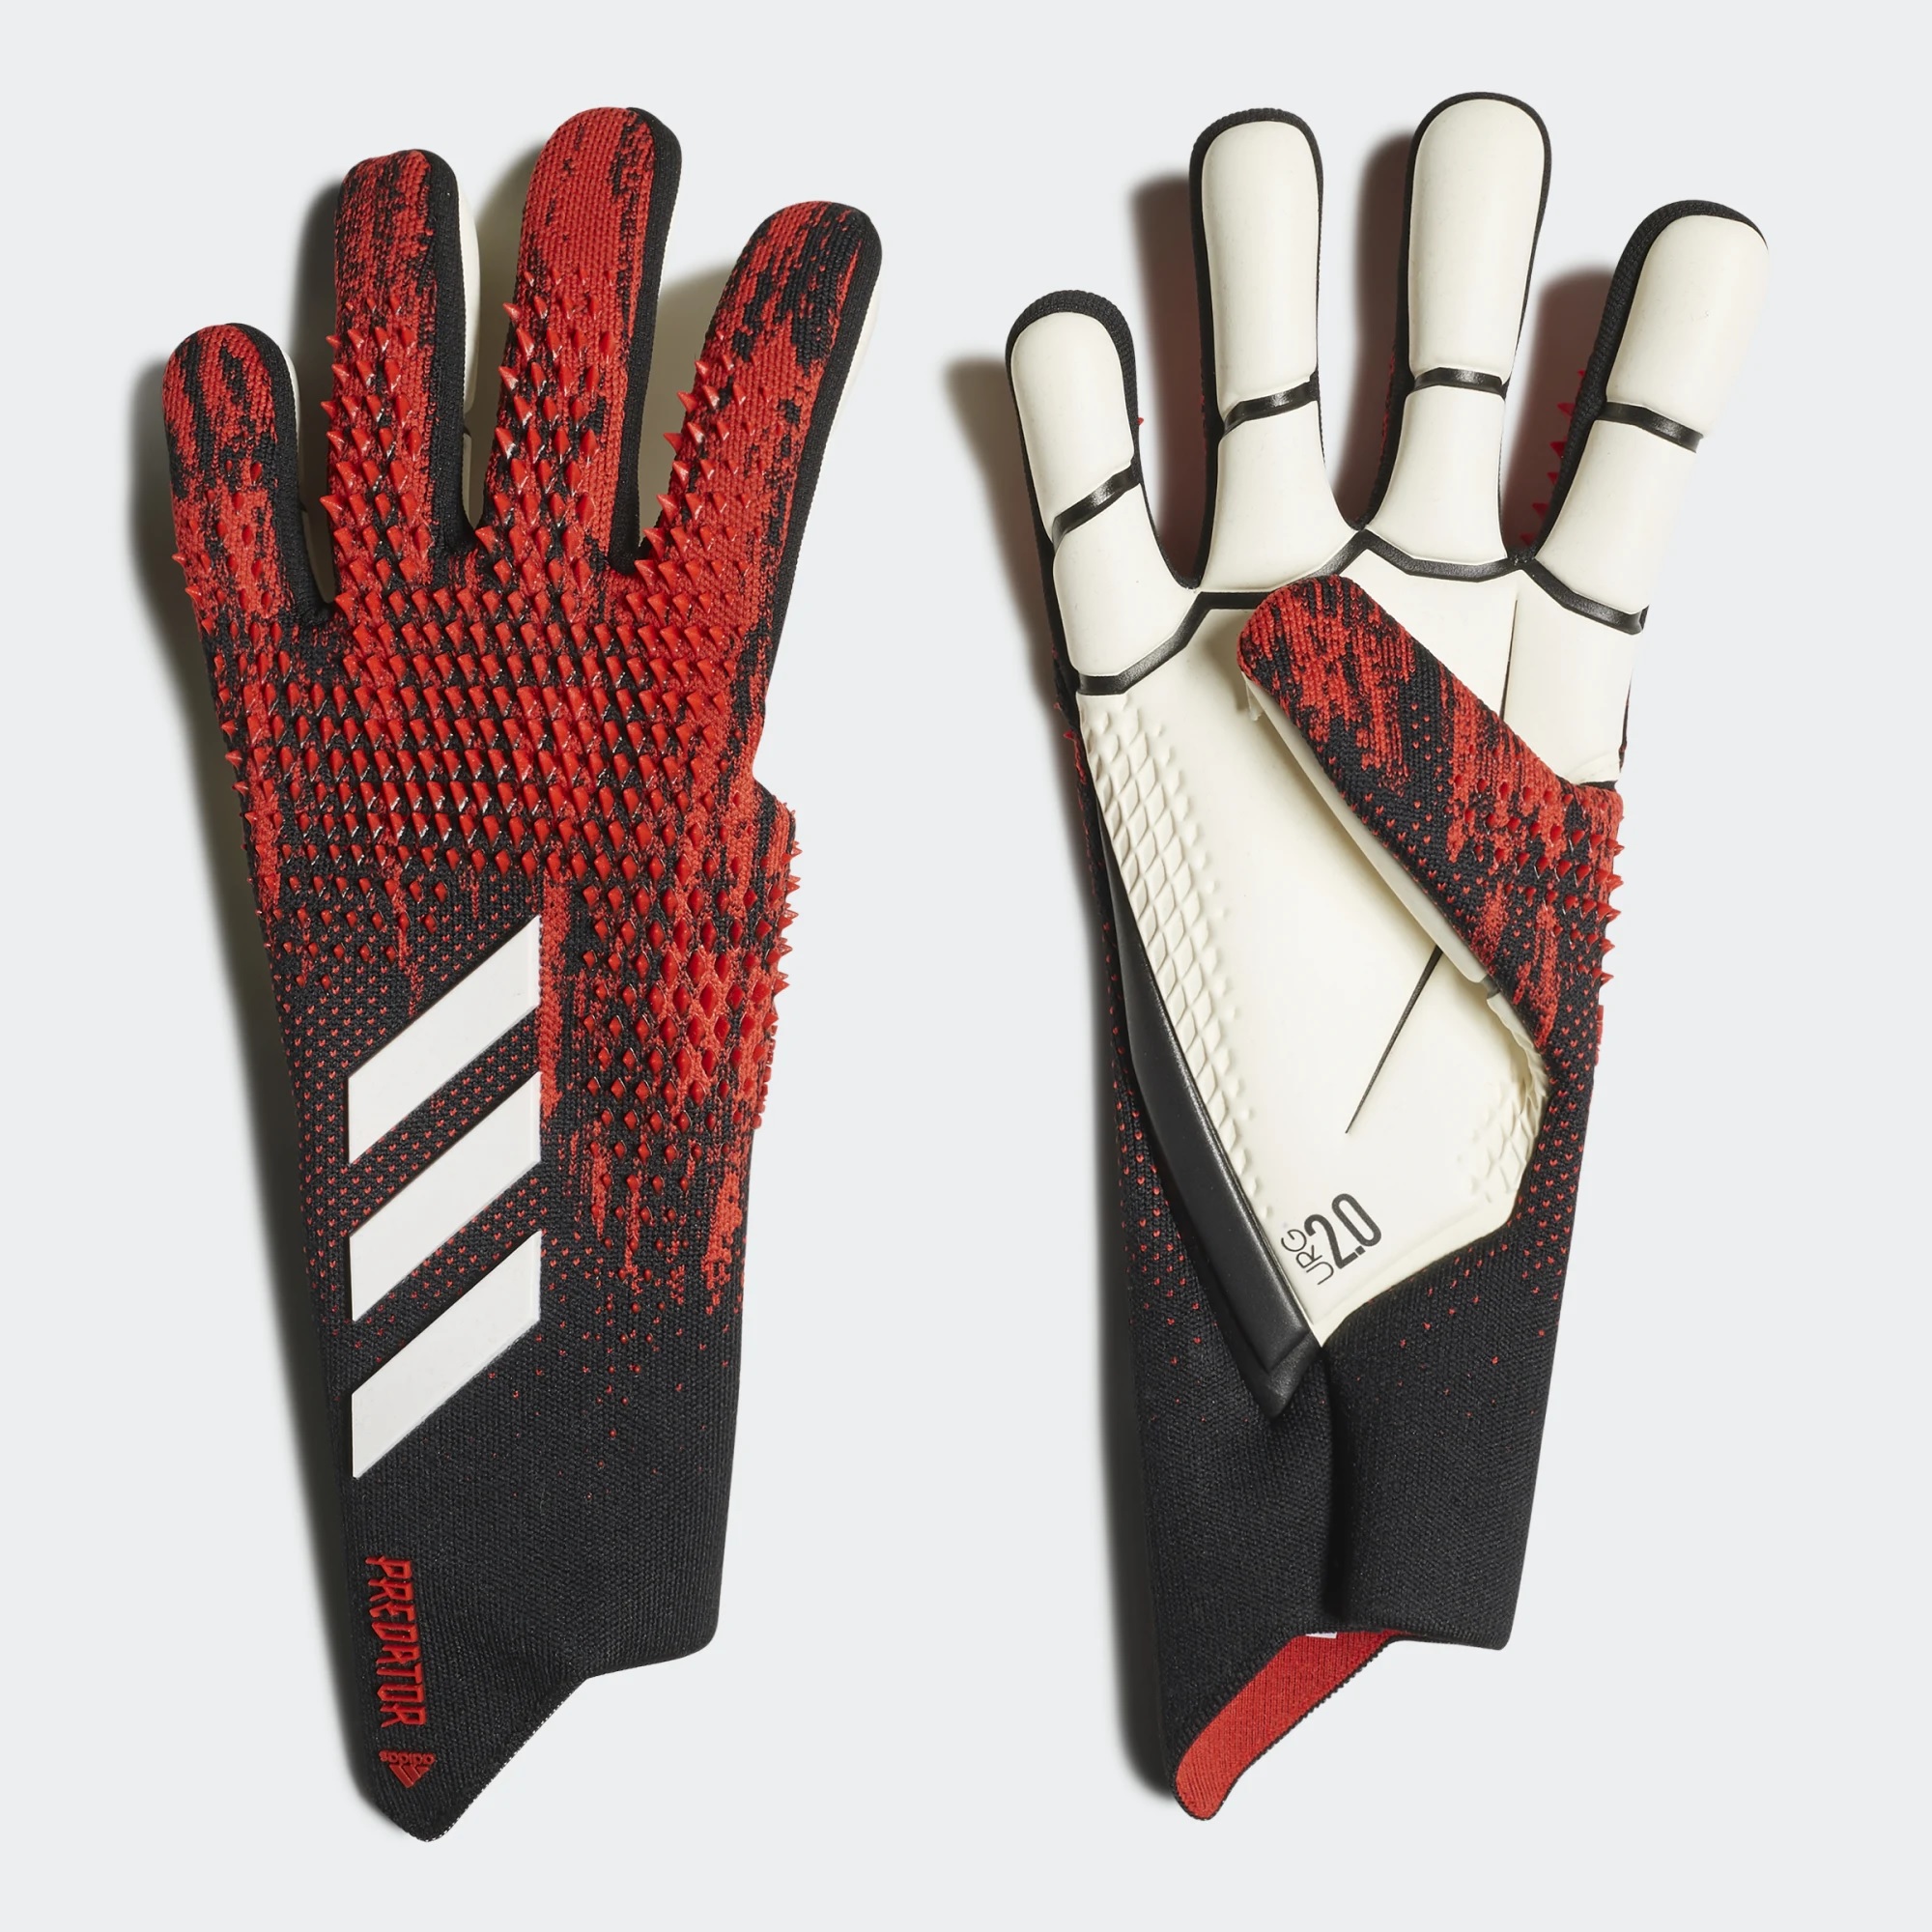 Predator for manual new gloves off 61% oslo.com.tr